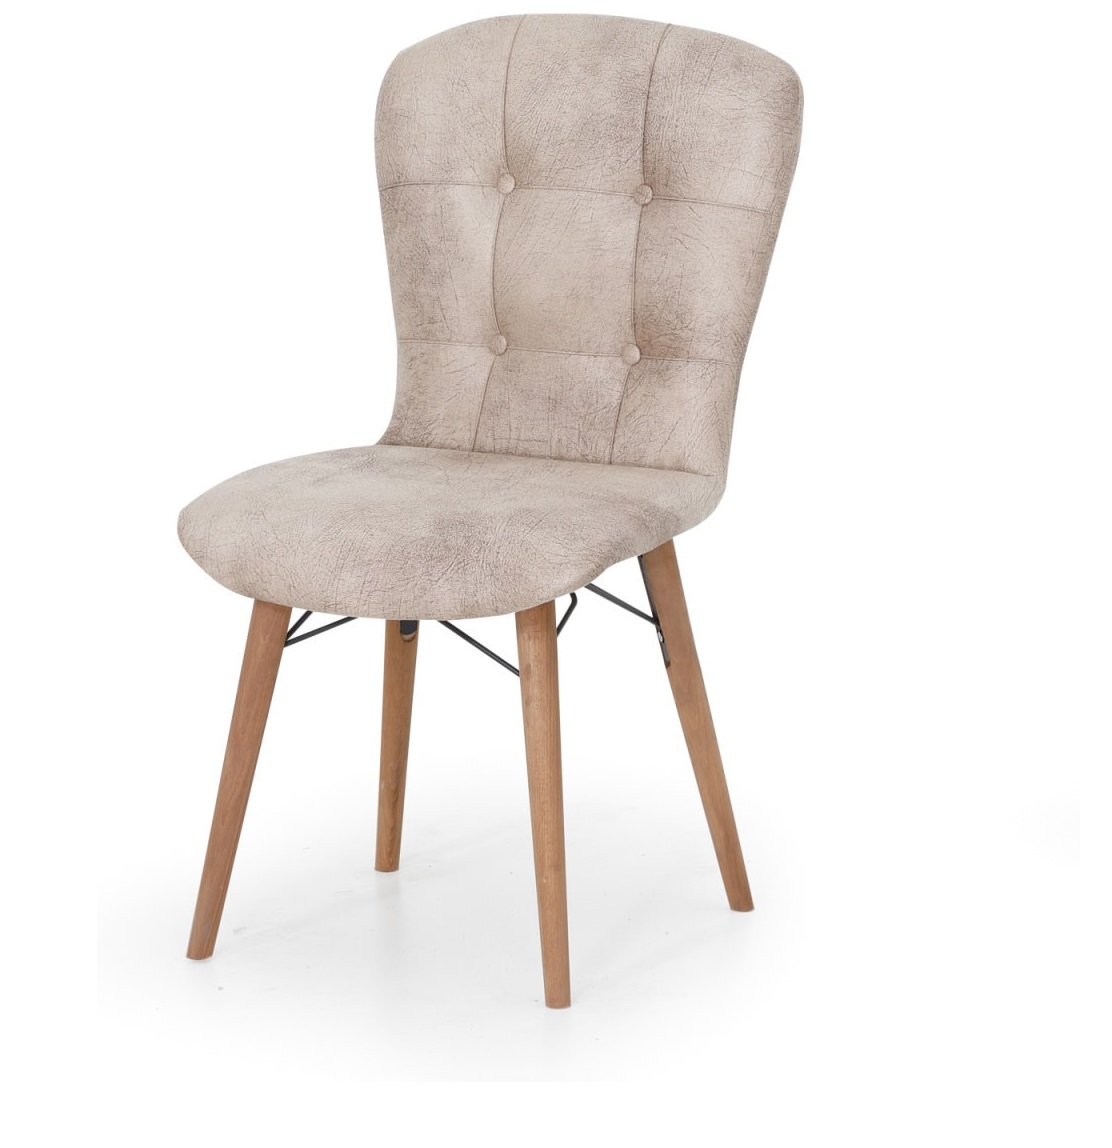 Set masa extensibila cu 4 scaune tapitate Homs cristal alb-bej 110 x 70 cm